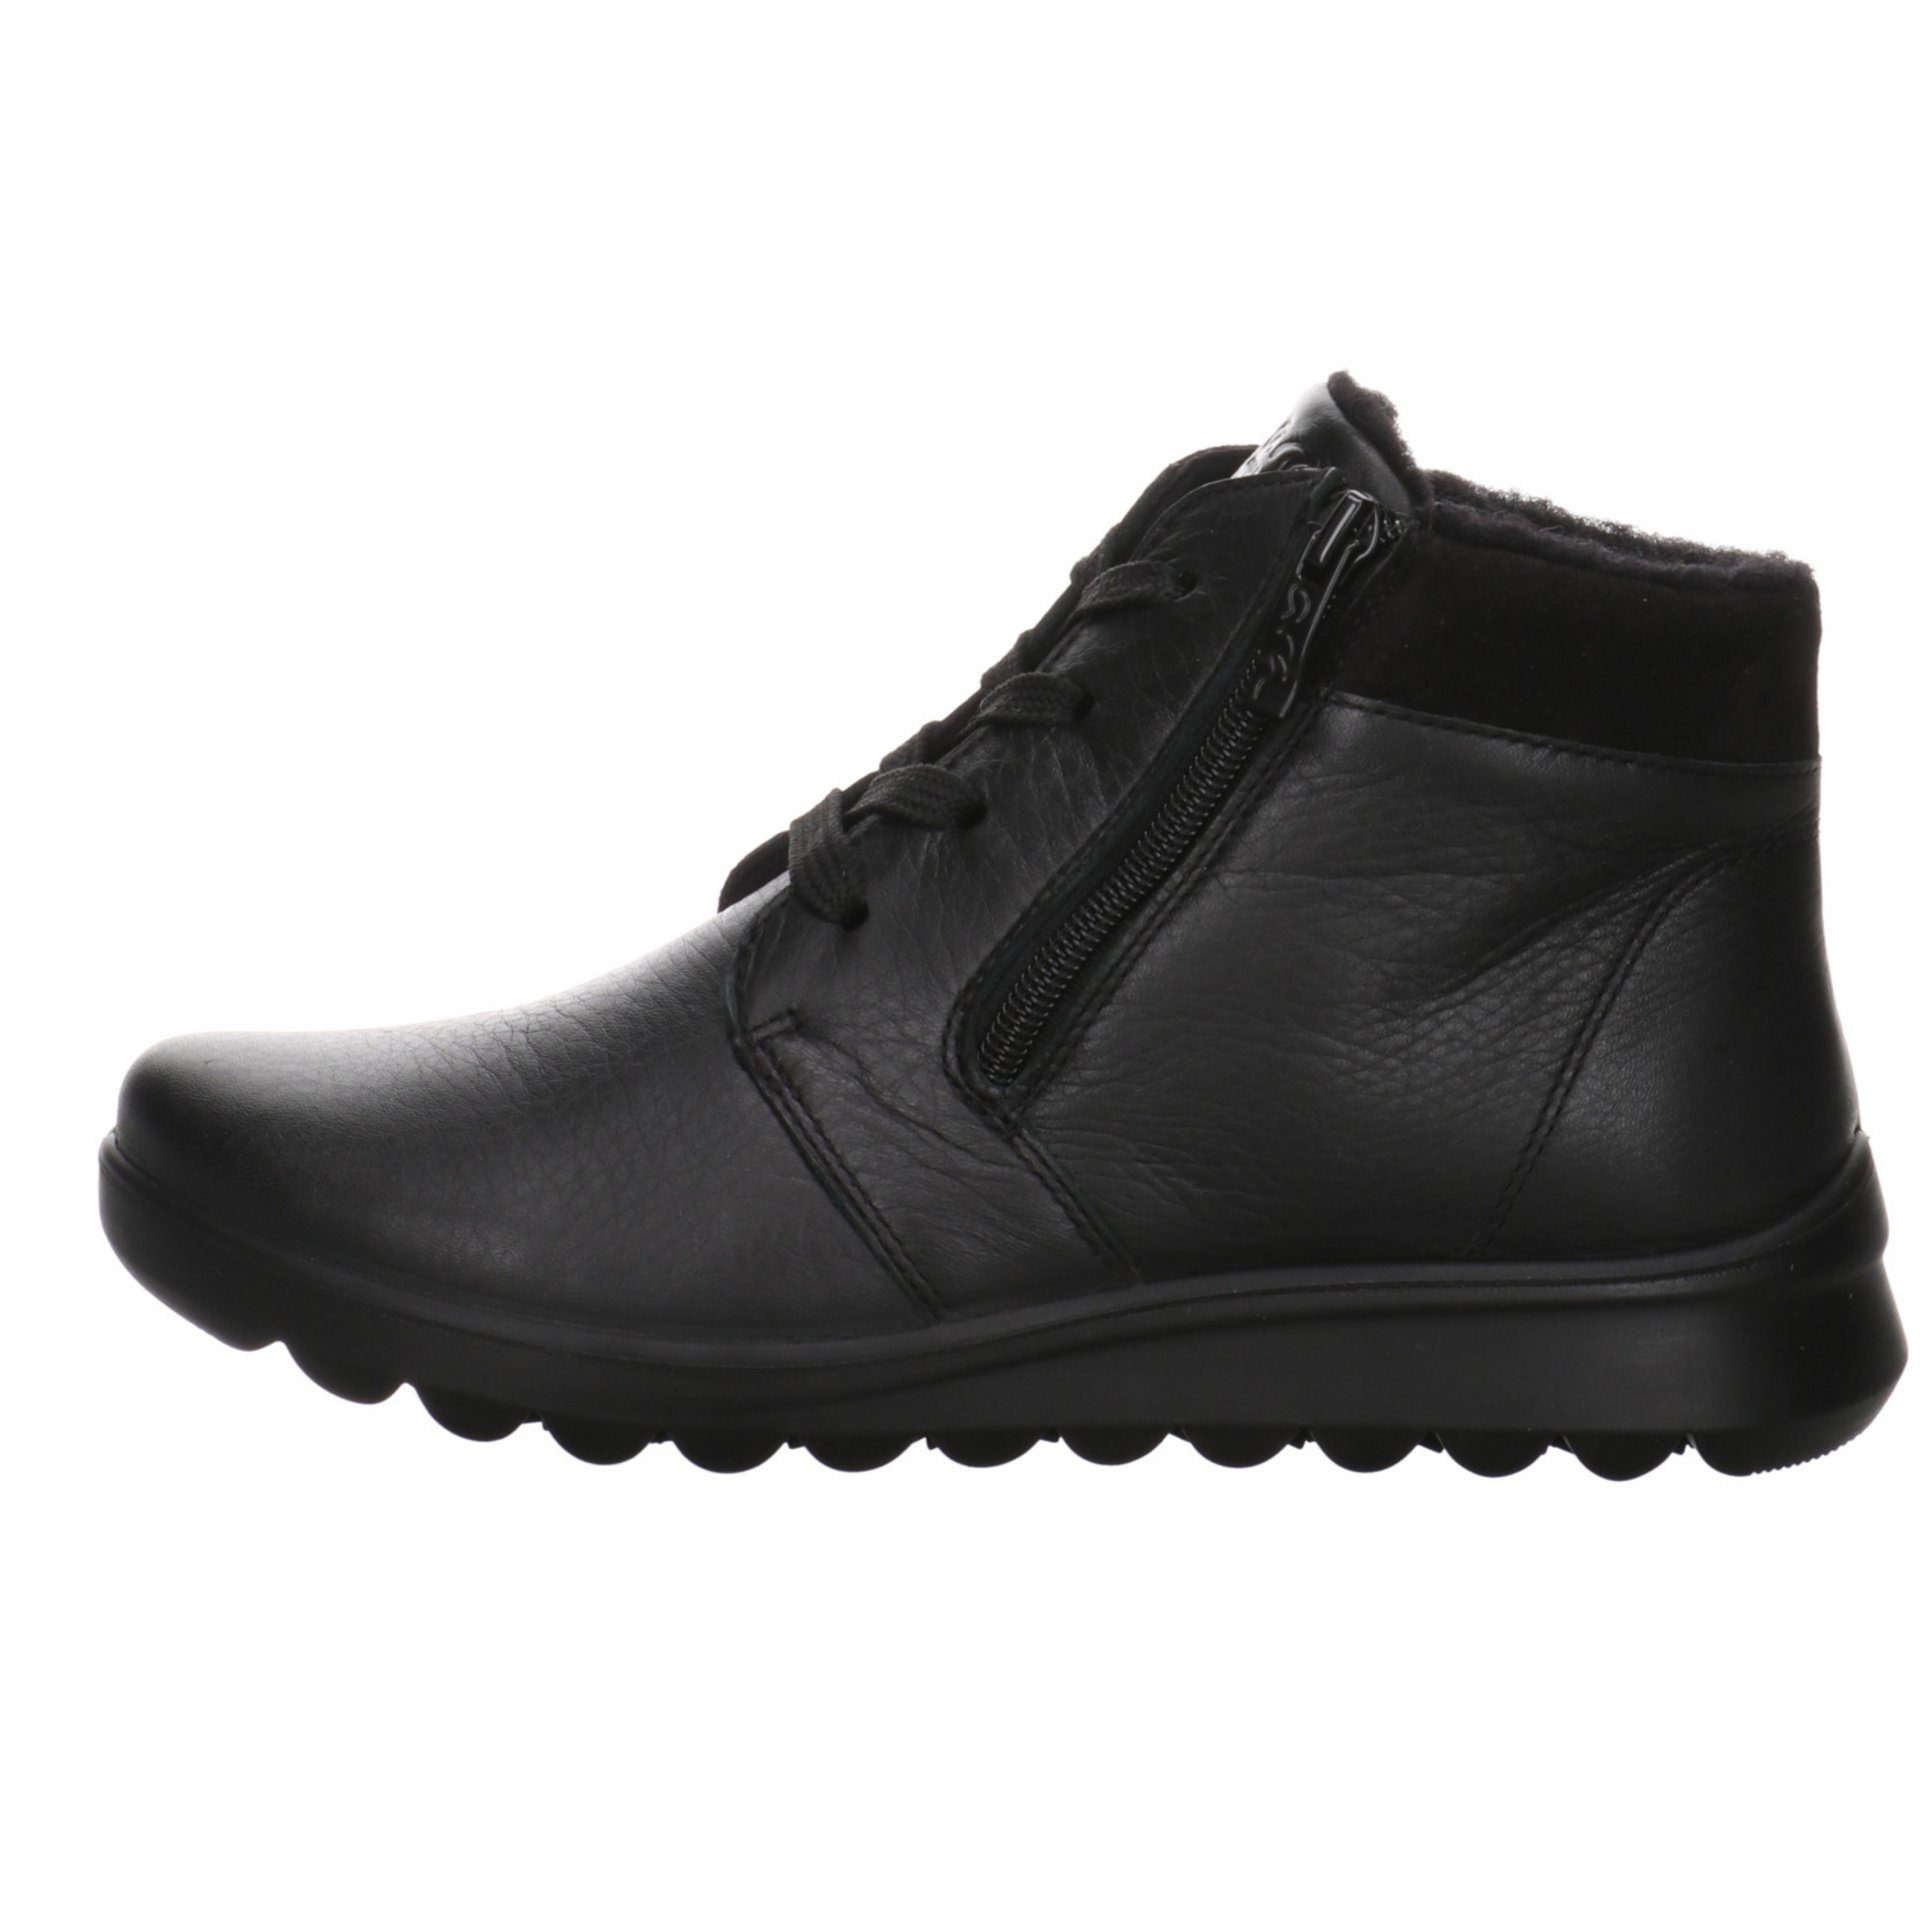 Stiefel Ara Schuhe schwarz Boots Damen Stiefelette 046874 Lederkombination Toronto